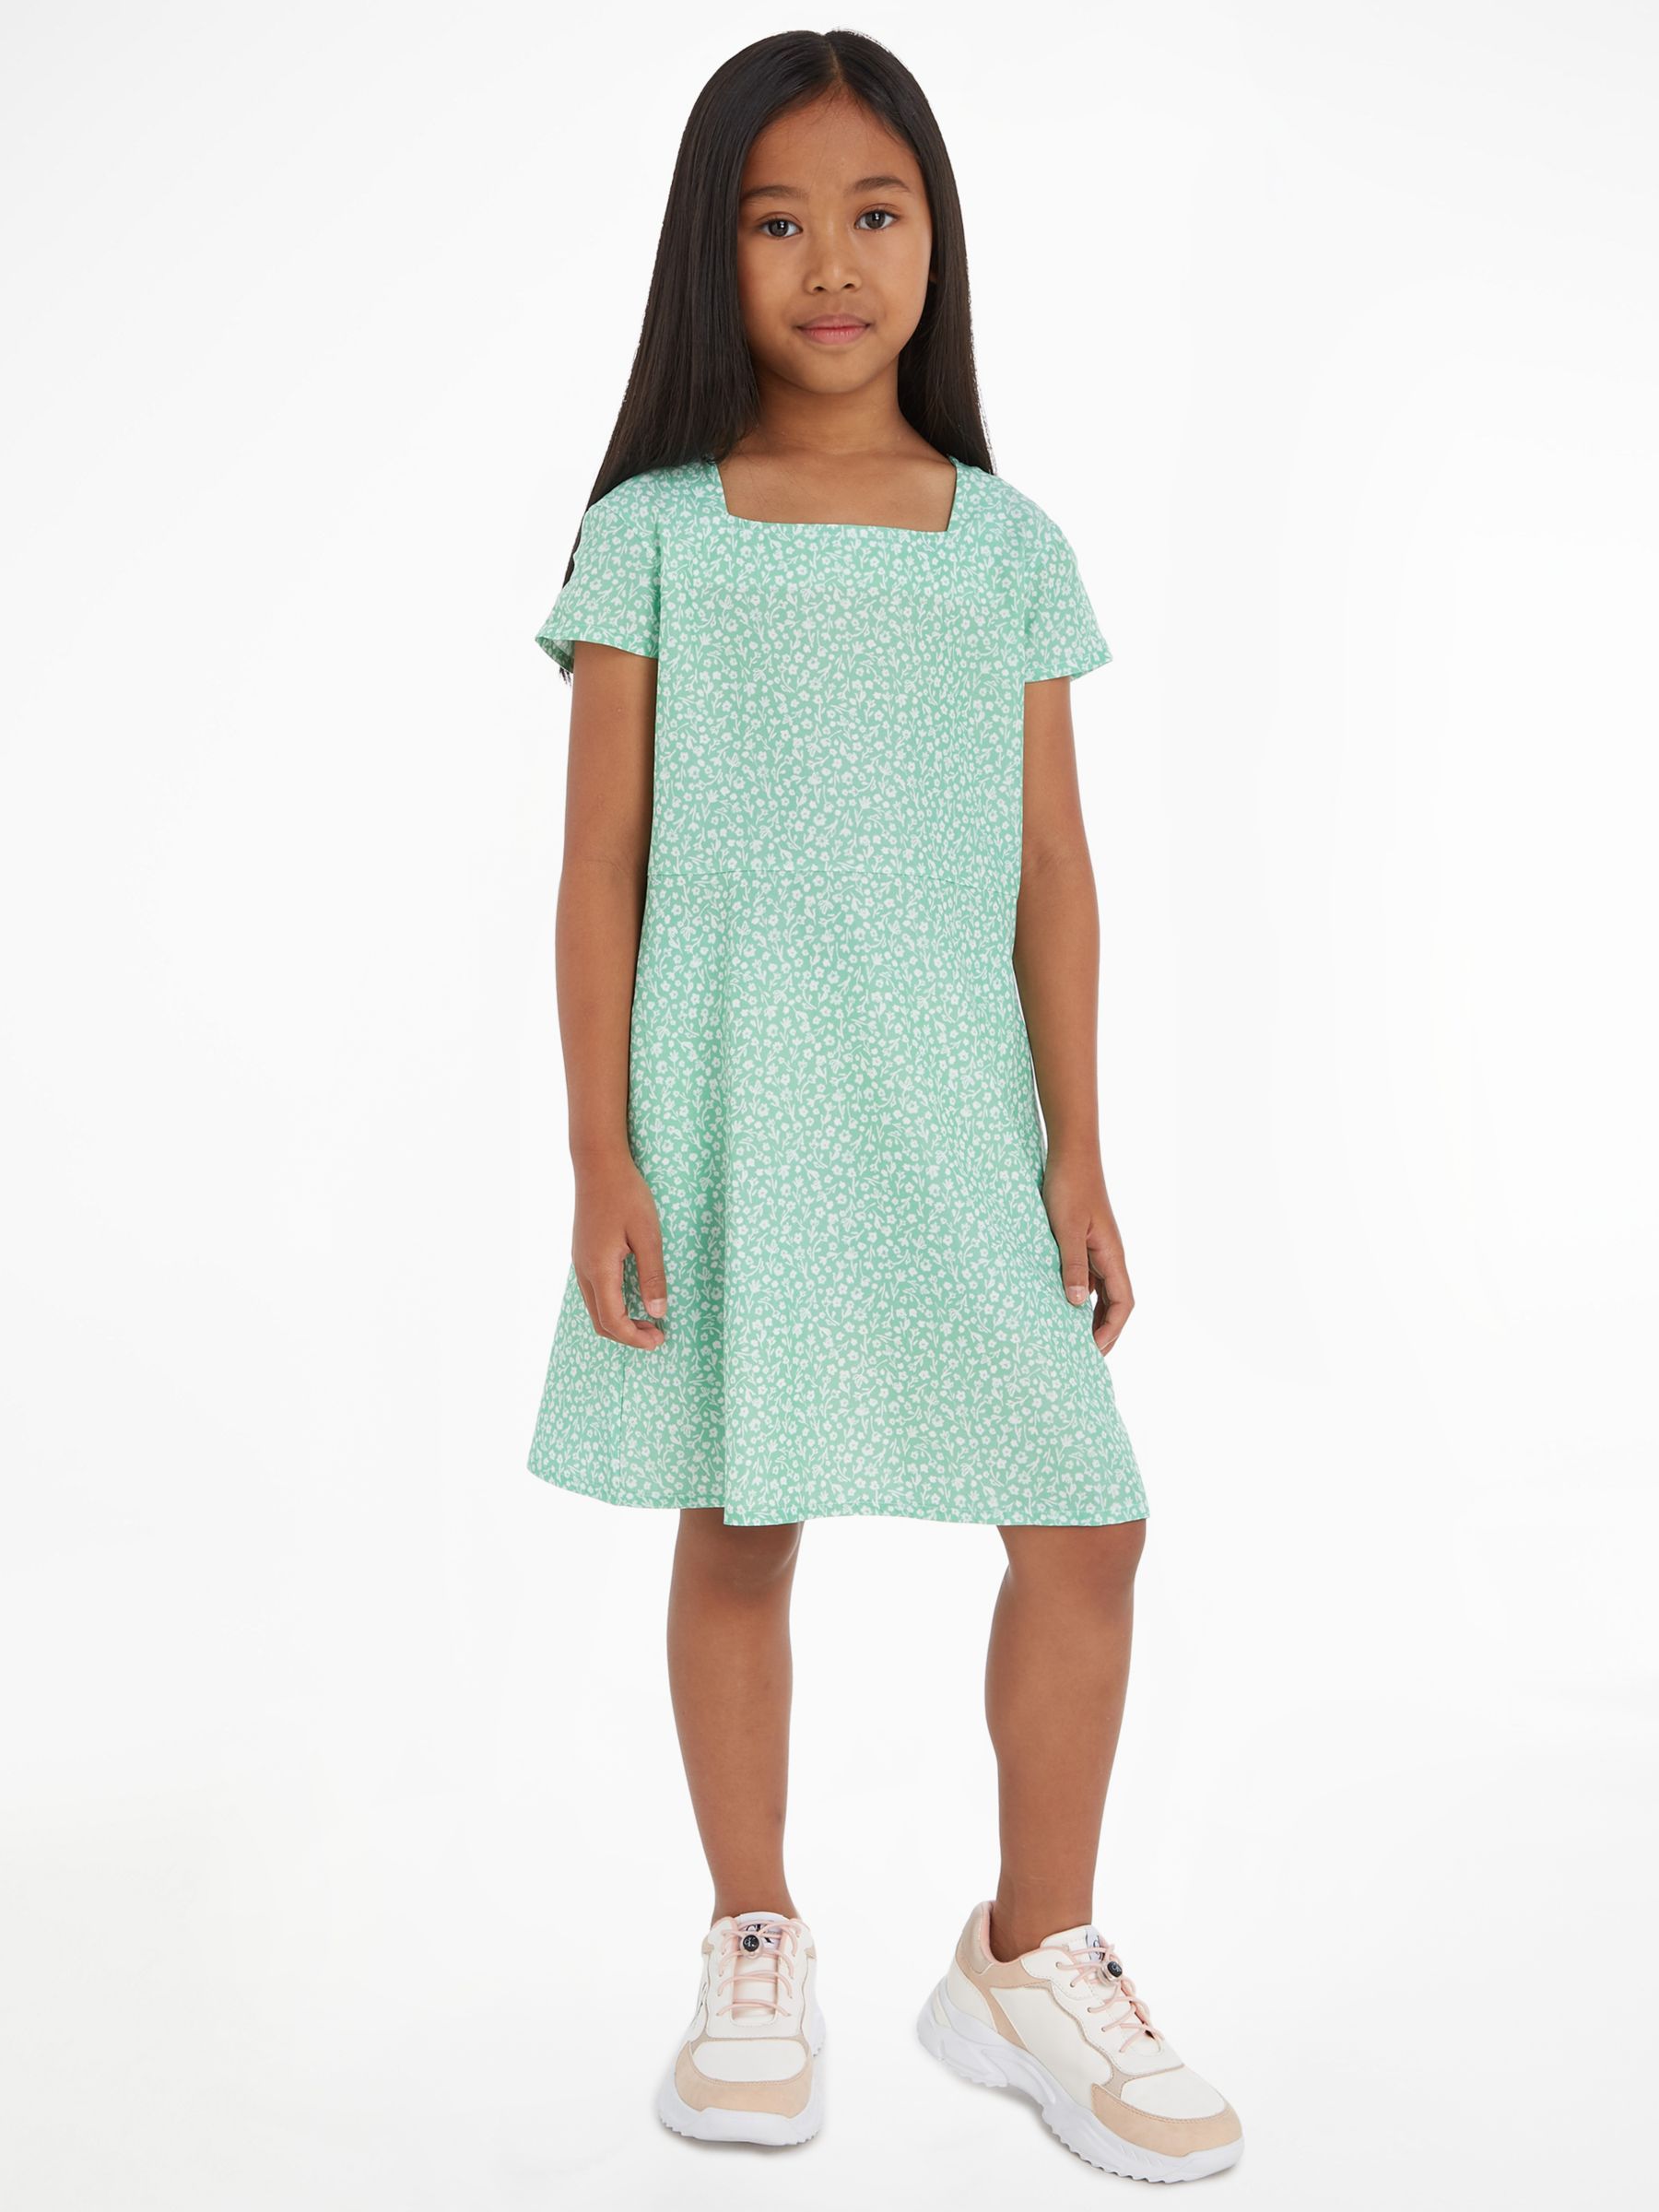 Calvin Klein Jeans Kids' Floral Mini Dress, Multi, 8 years